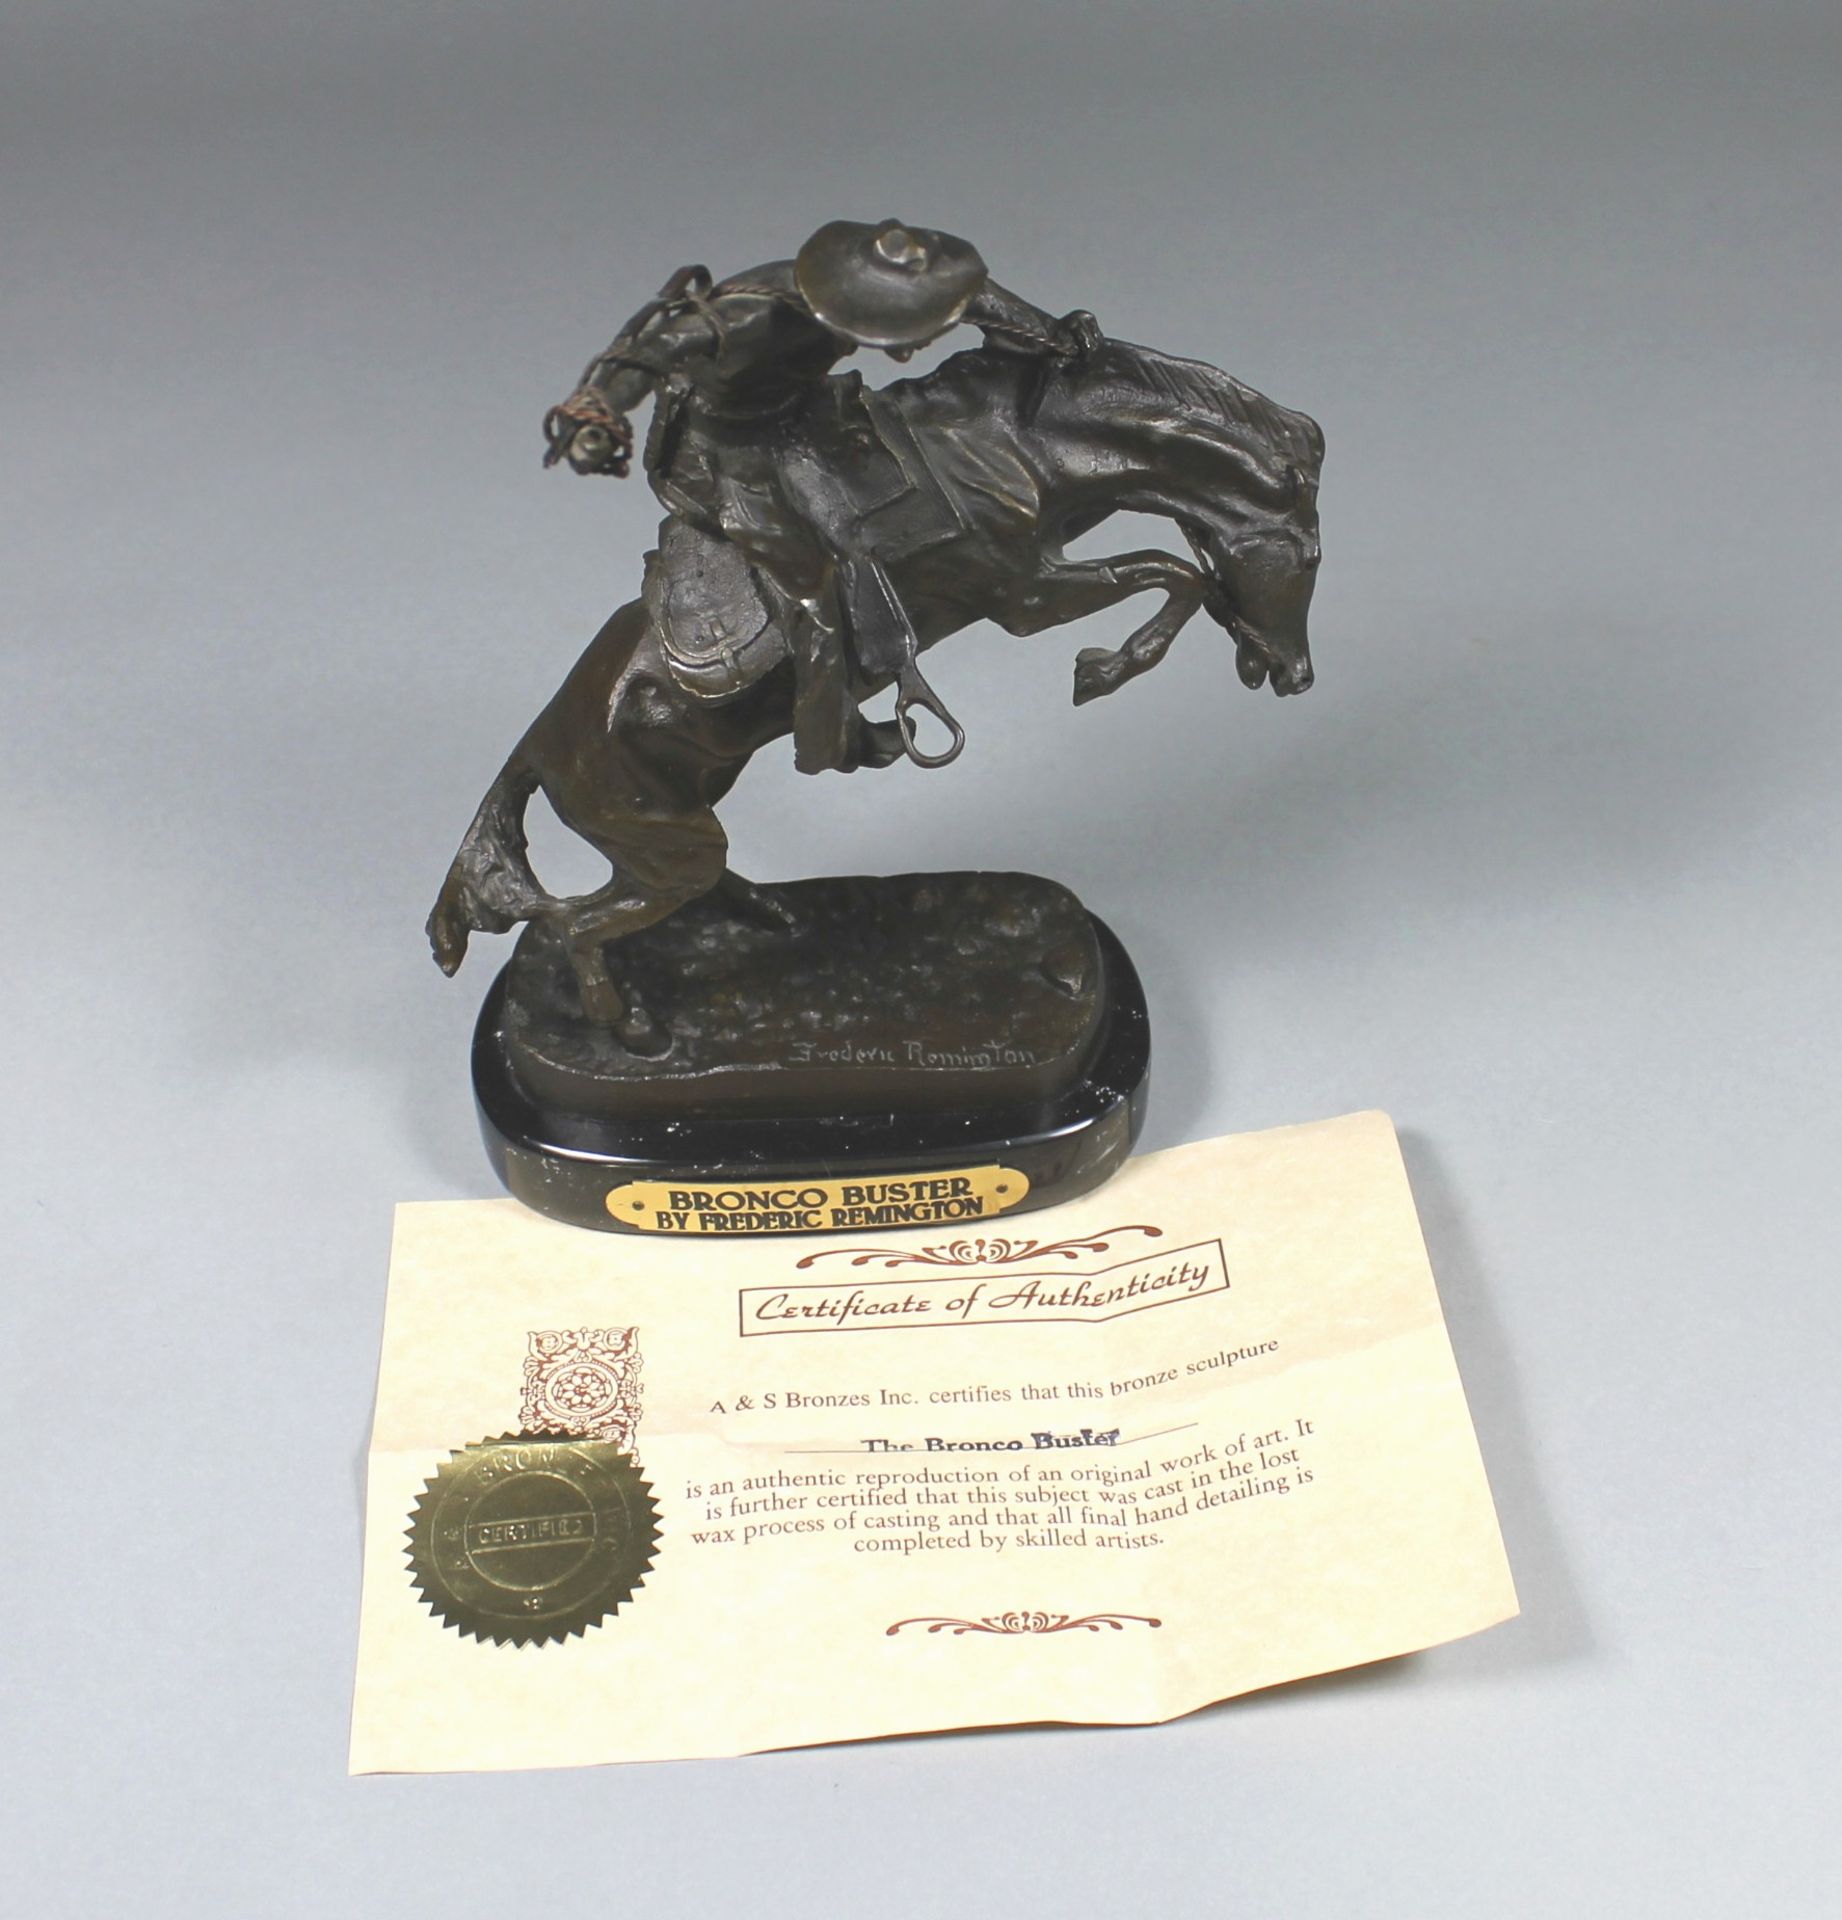 1 Bronzefigur auf ovaler Marmorplinthe "The Bronco Buster by Frederic Remington", mit Zertifikat,